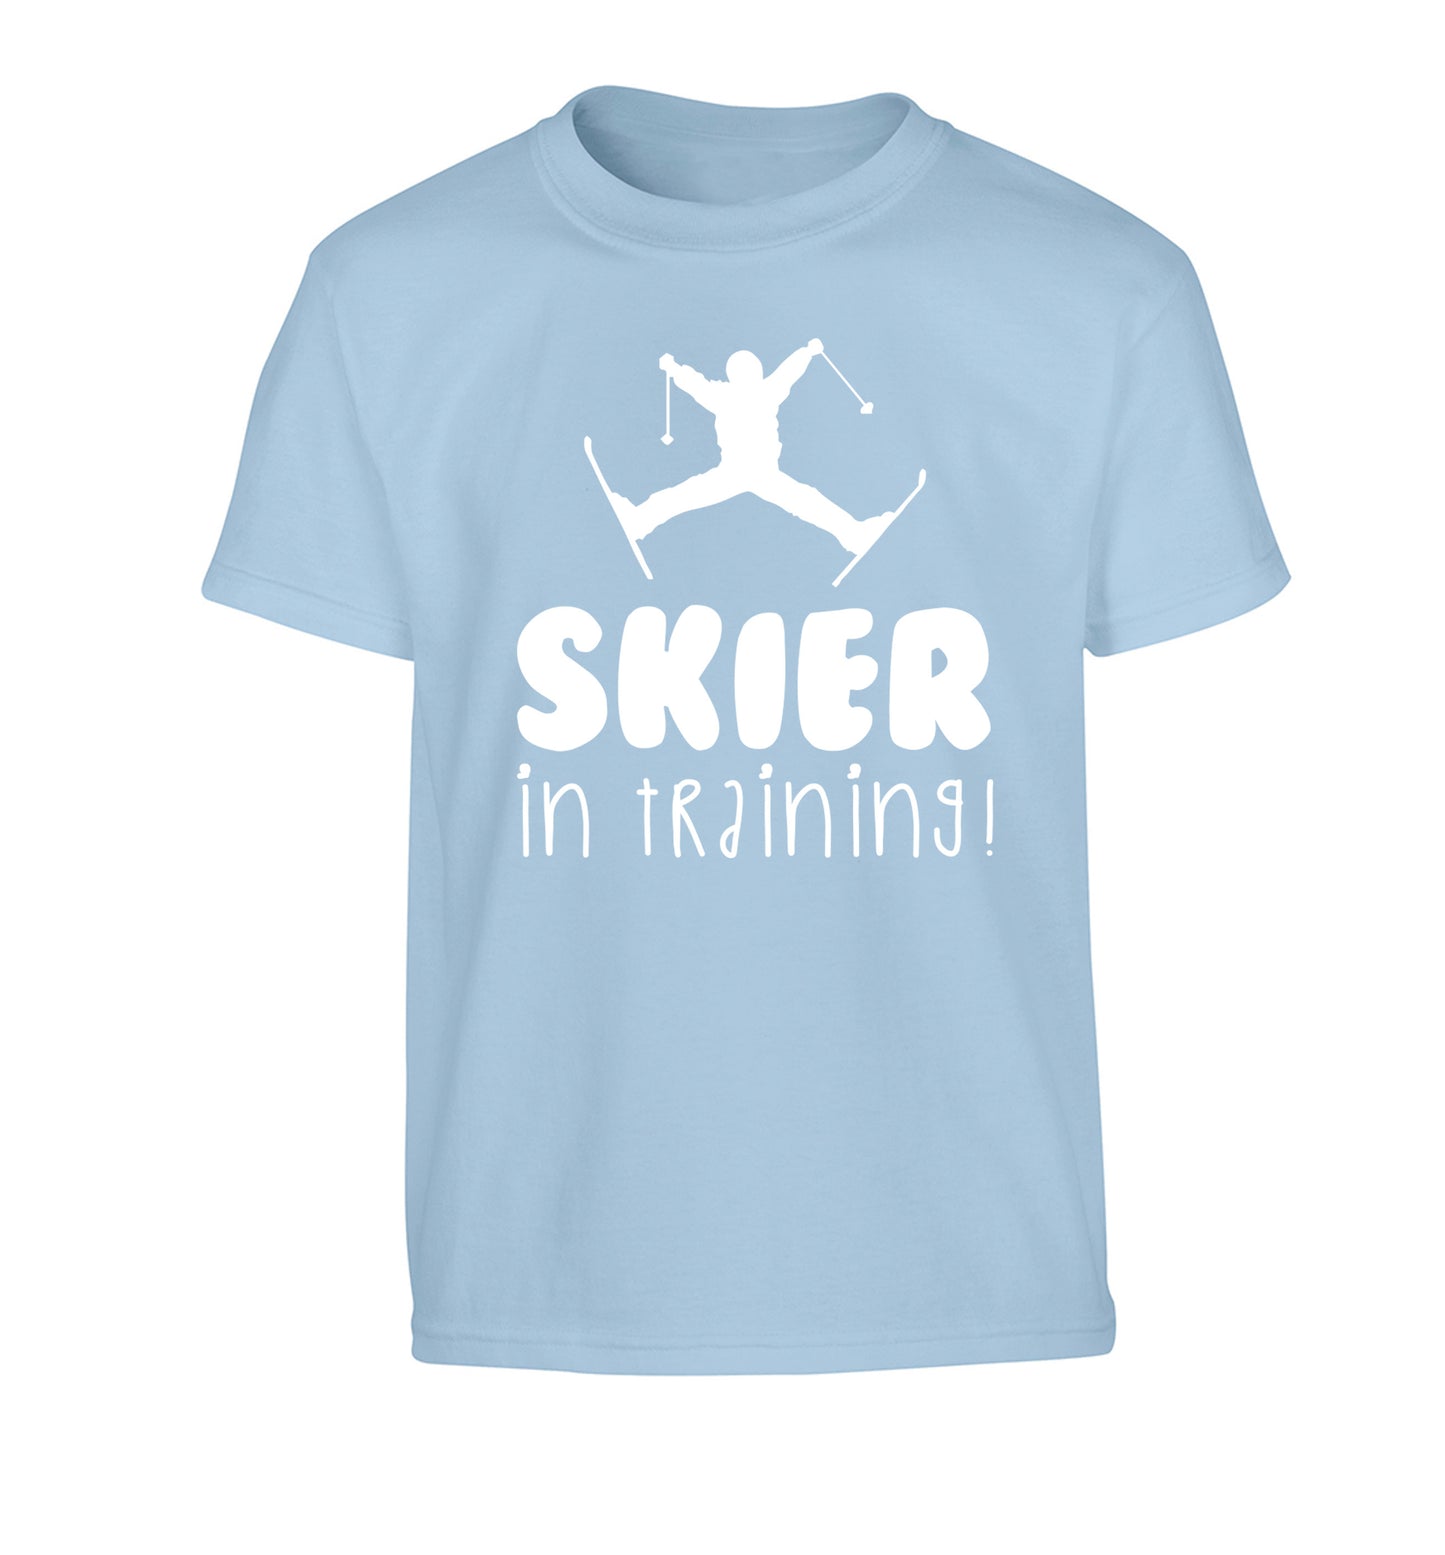 Skier in training Children's light blue Tshirt 12-14 Years